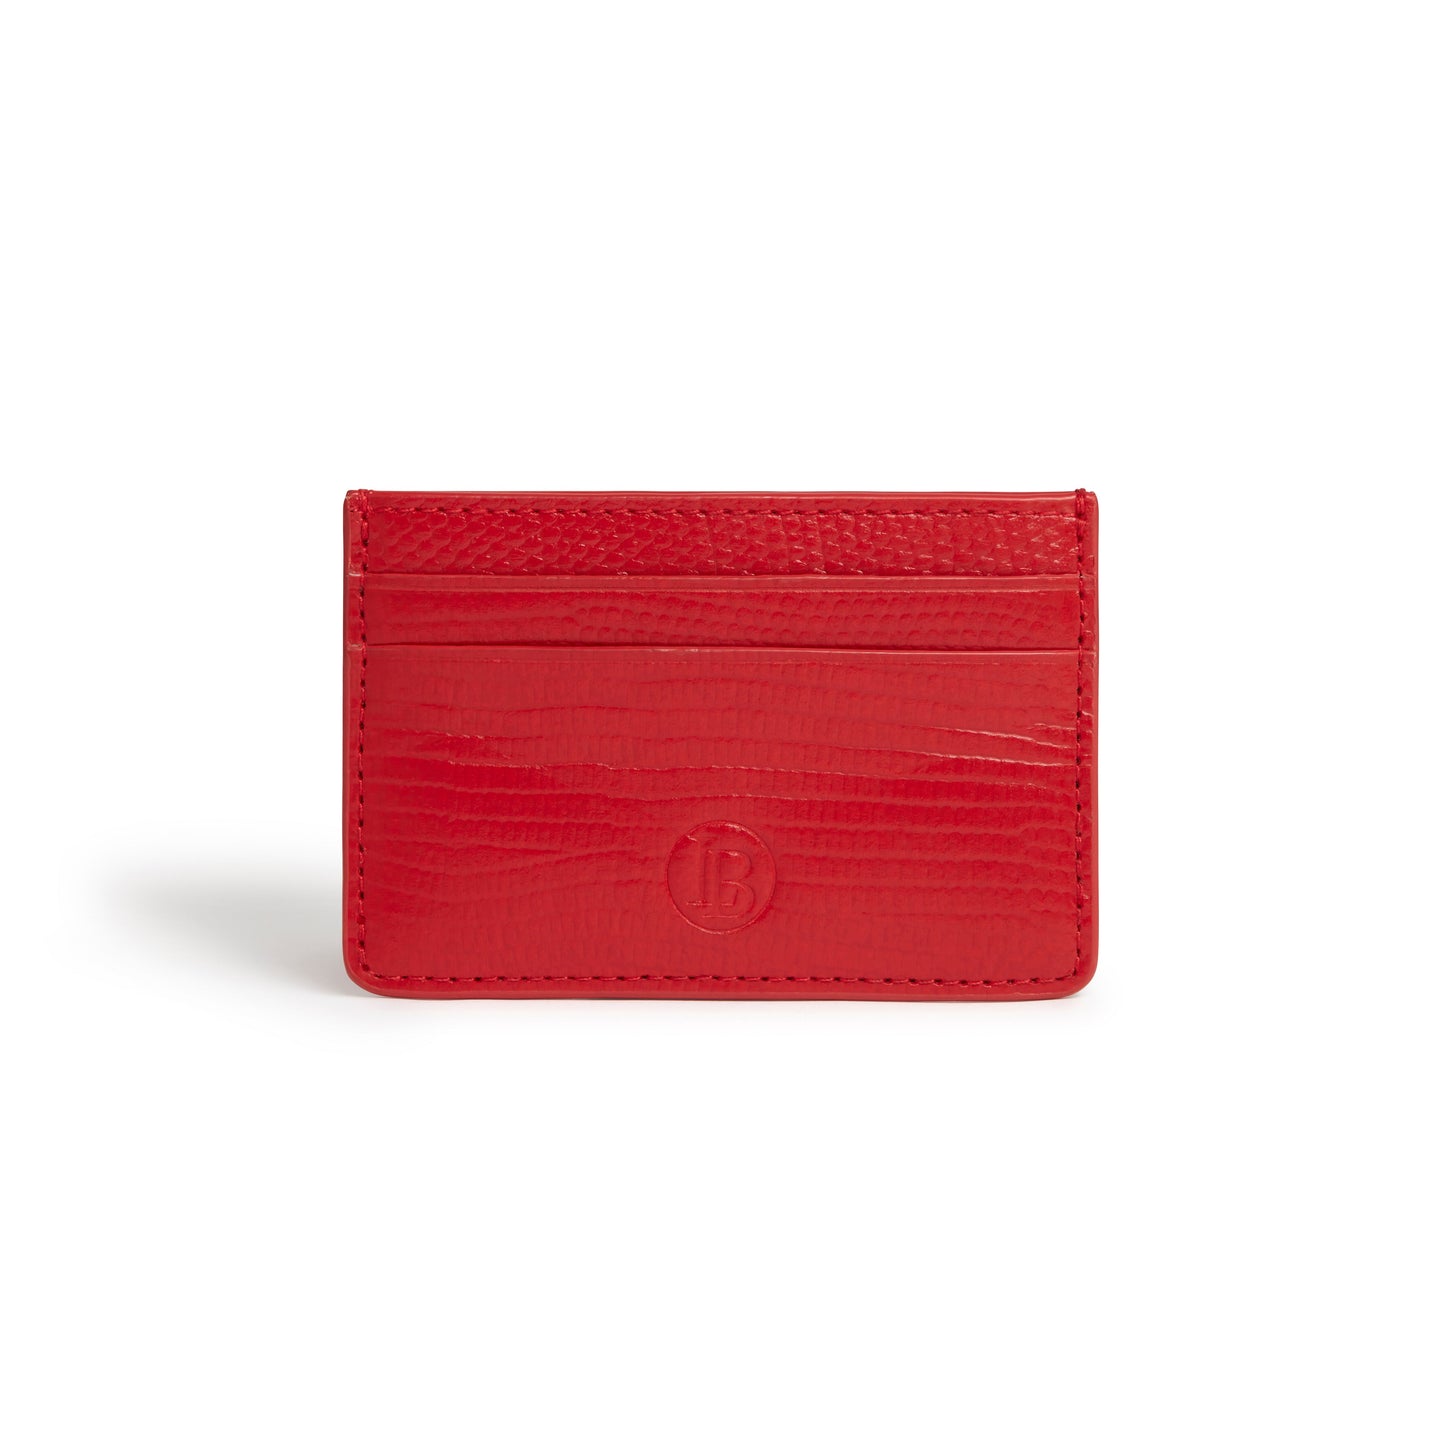 Red CC holder & Key Chain Gift Box | Vegan Leather-2